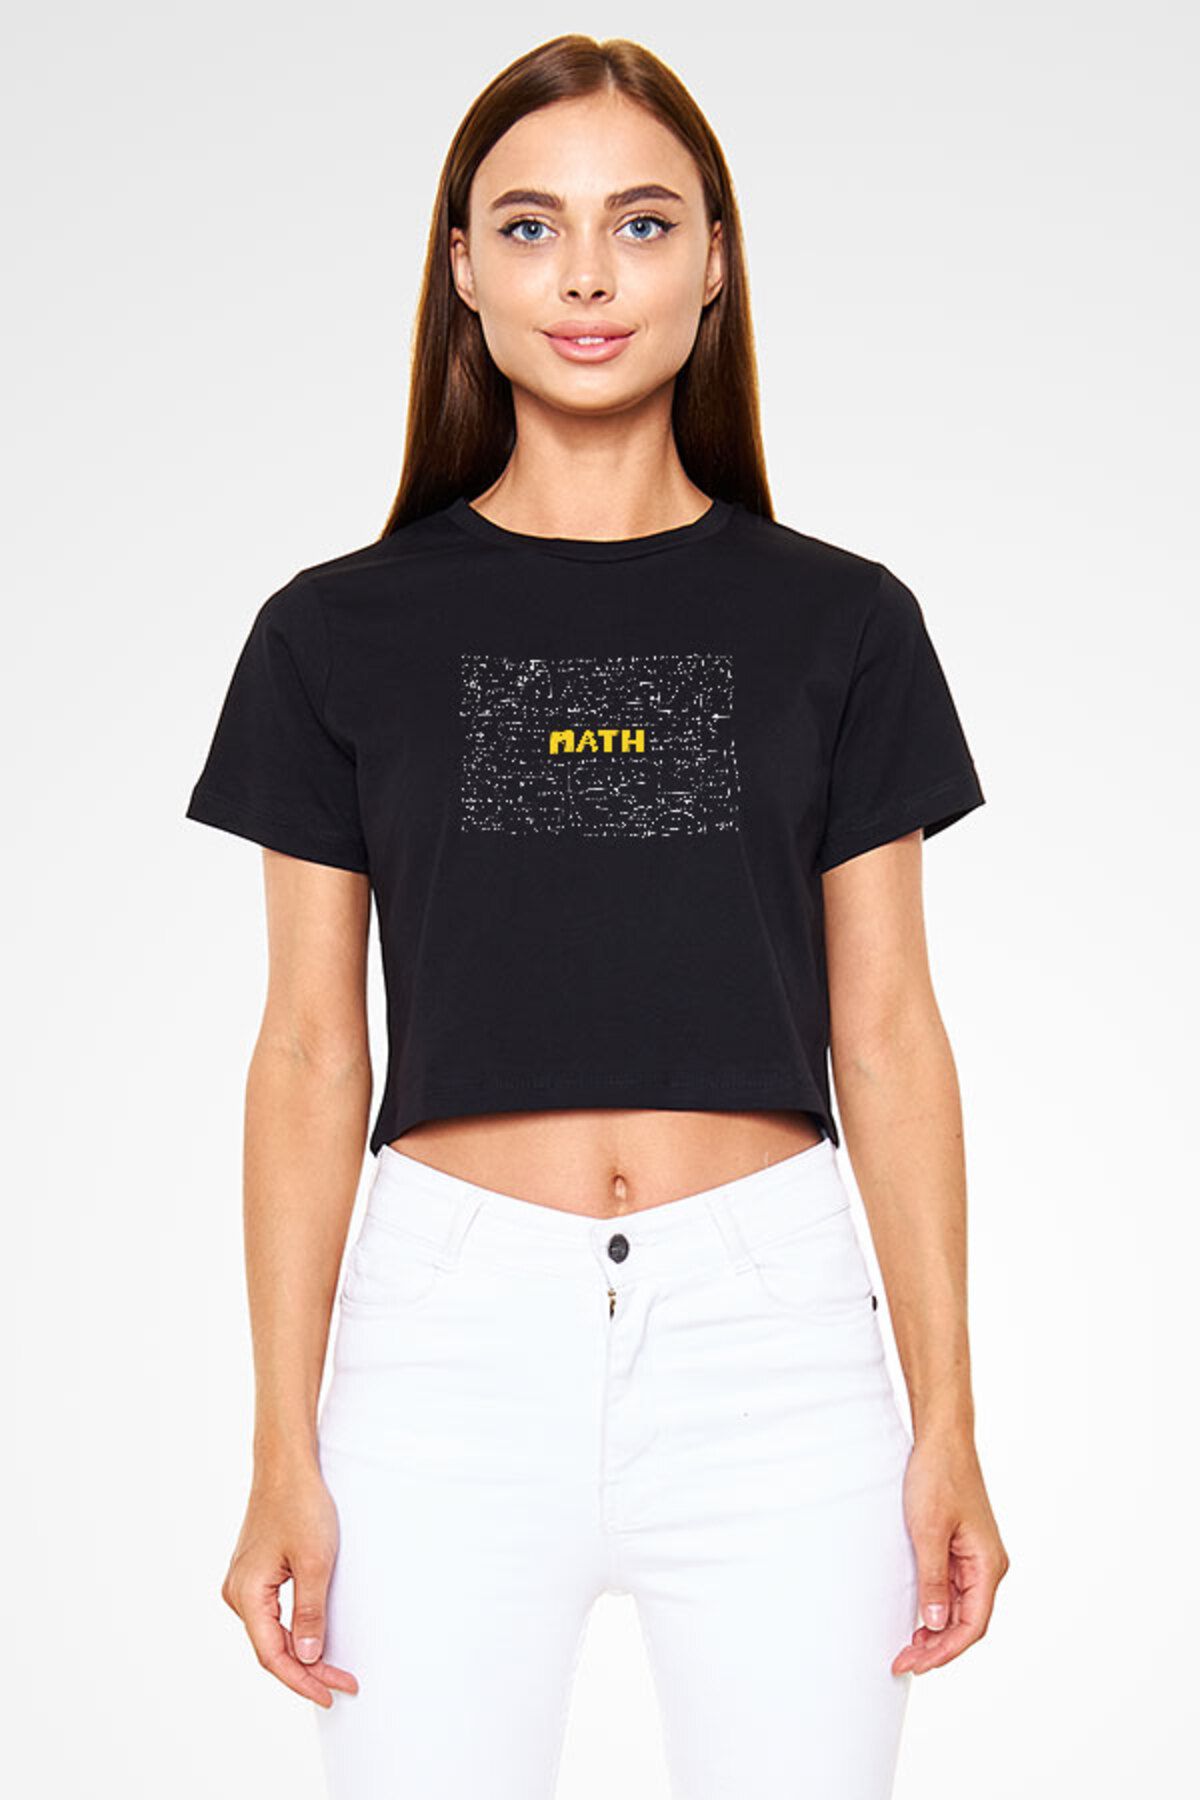 Darkhane Matematik Kara Tahta Formüller Siyah Unisex Crop Top Tişört T-Shirt